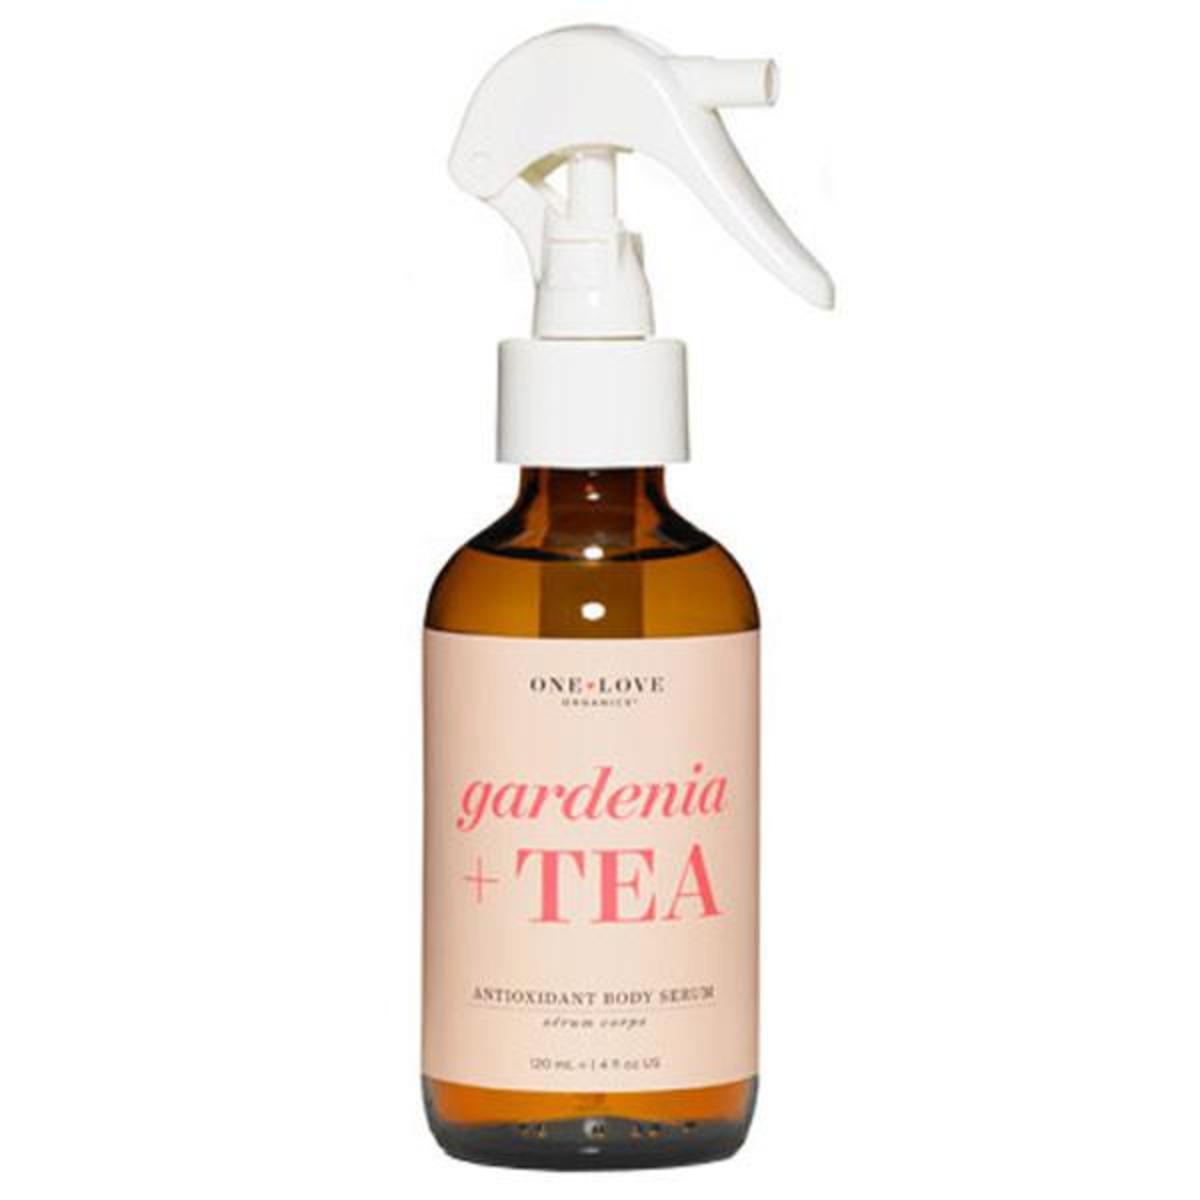 One Love Organics Gardenia + Tea Antioxidant Body Serum